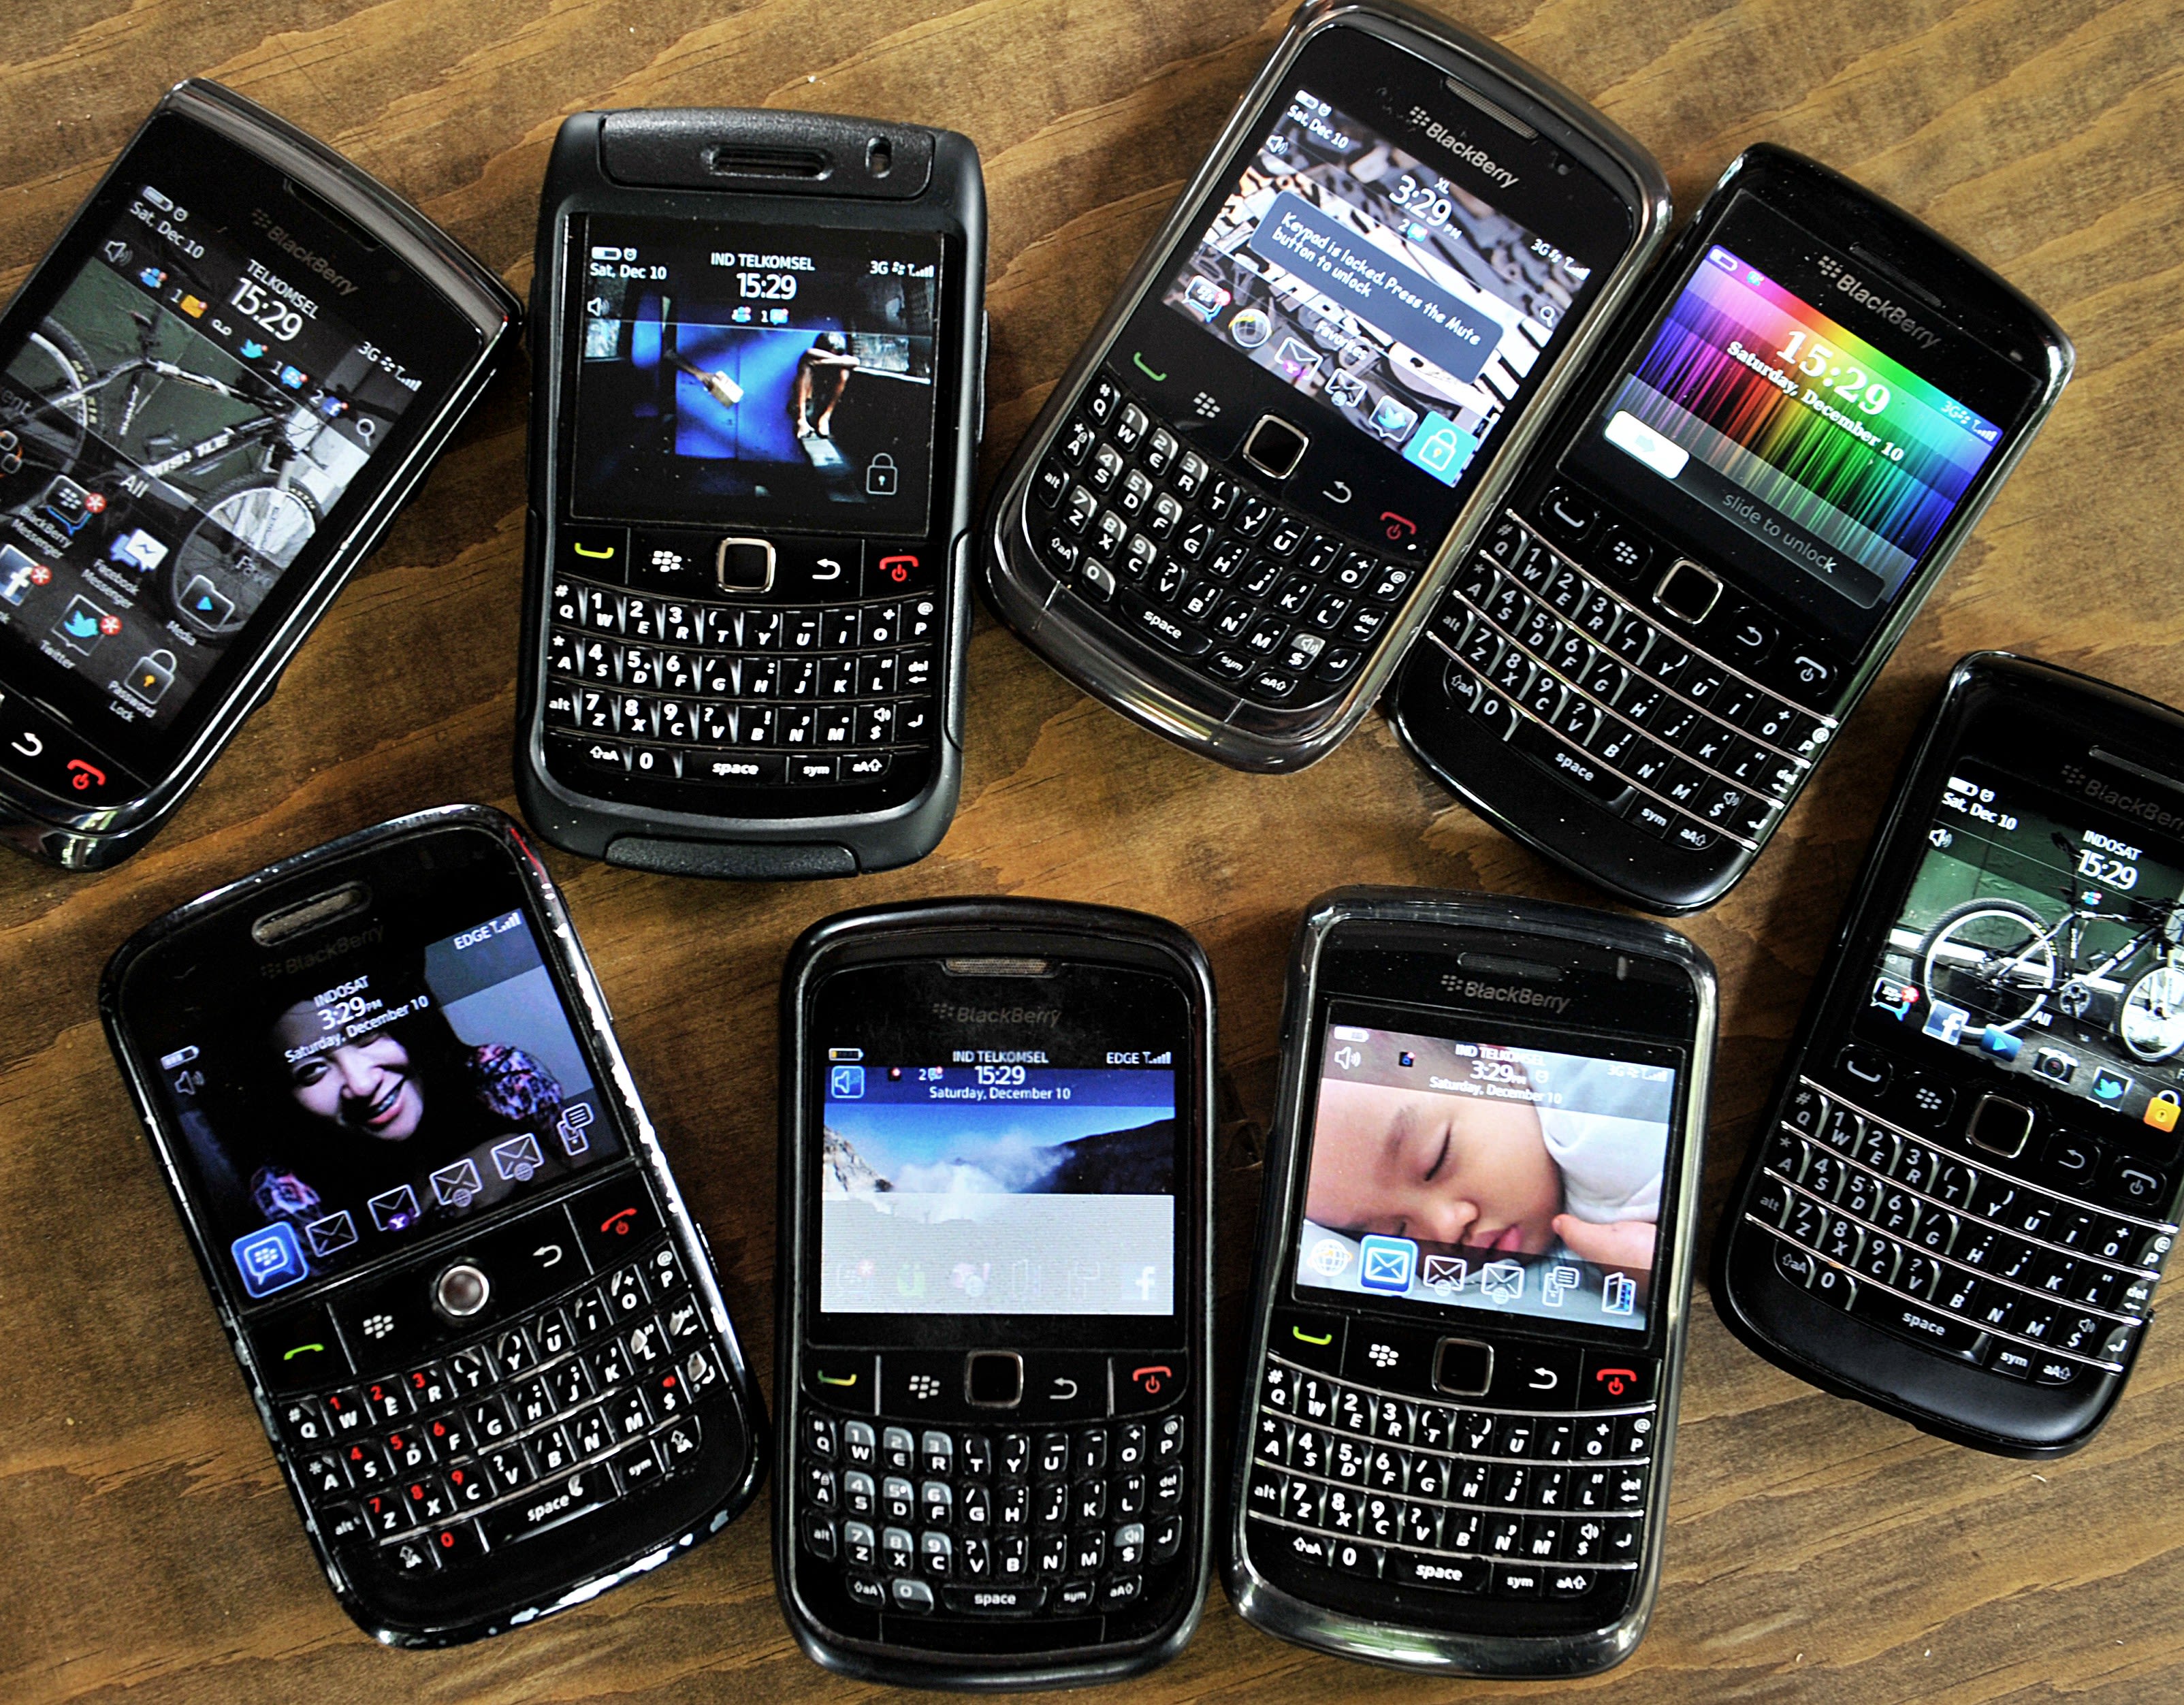 blackberry slide phones